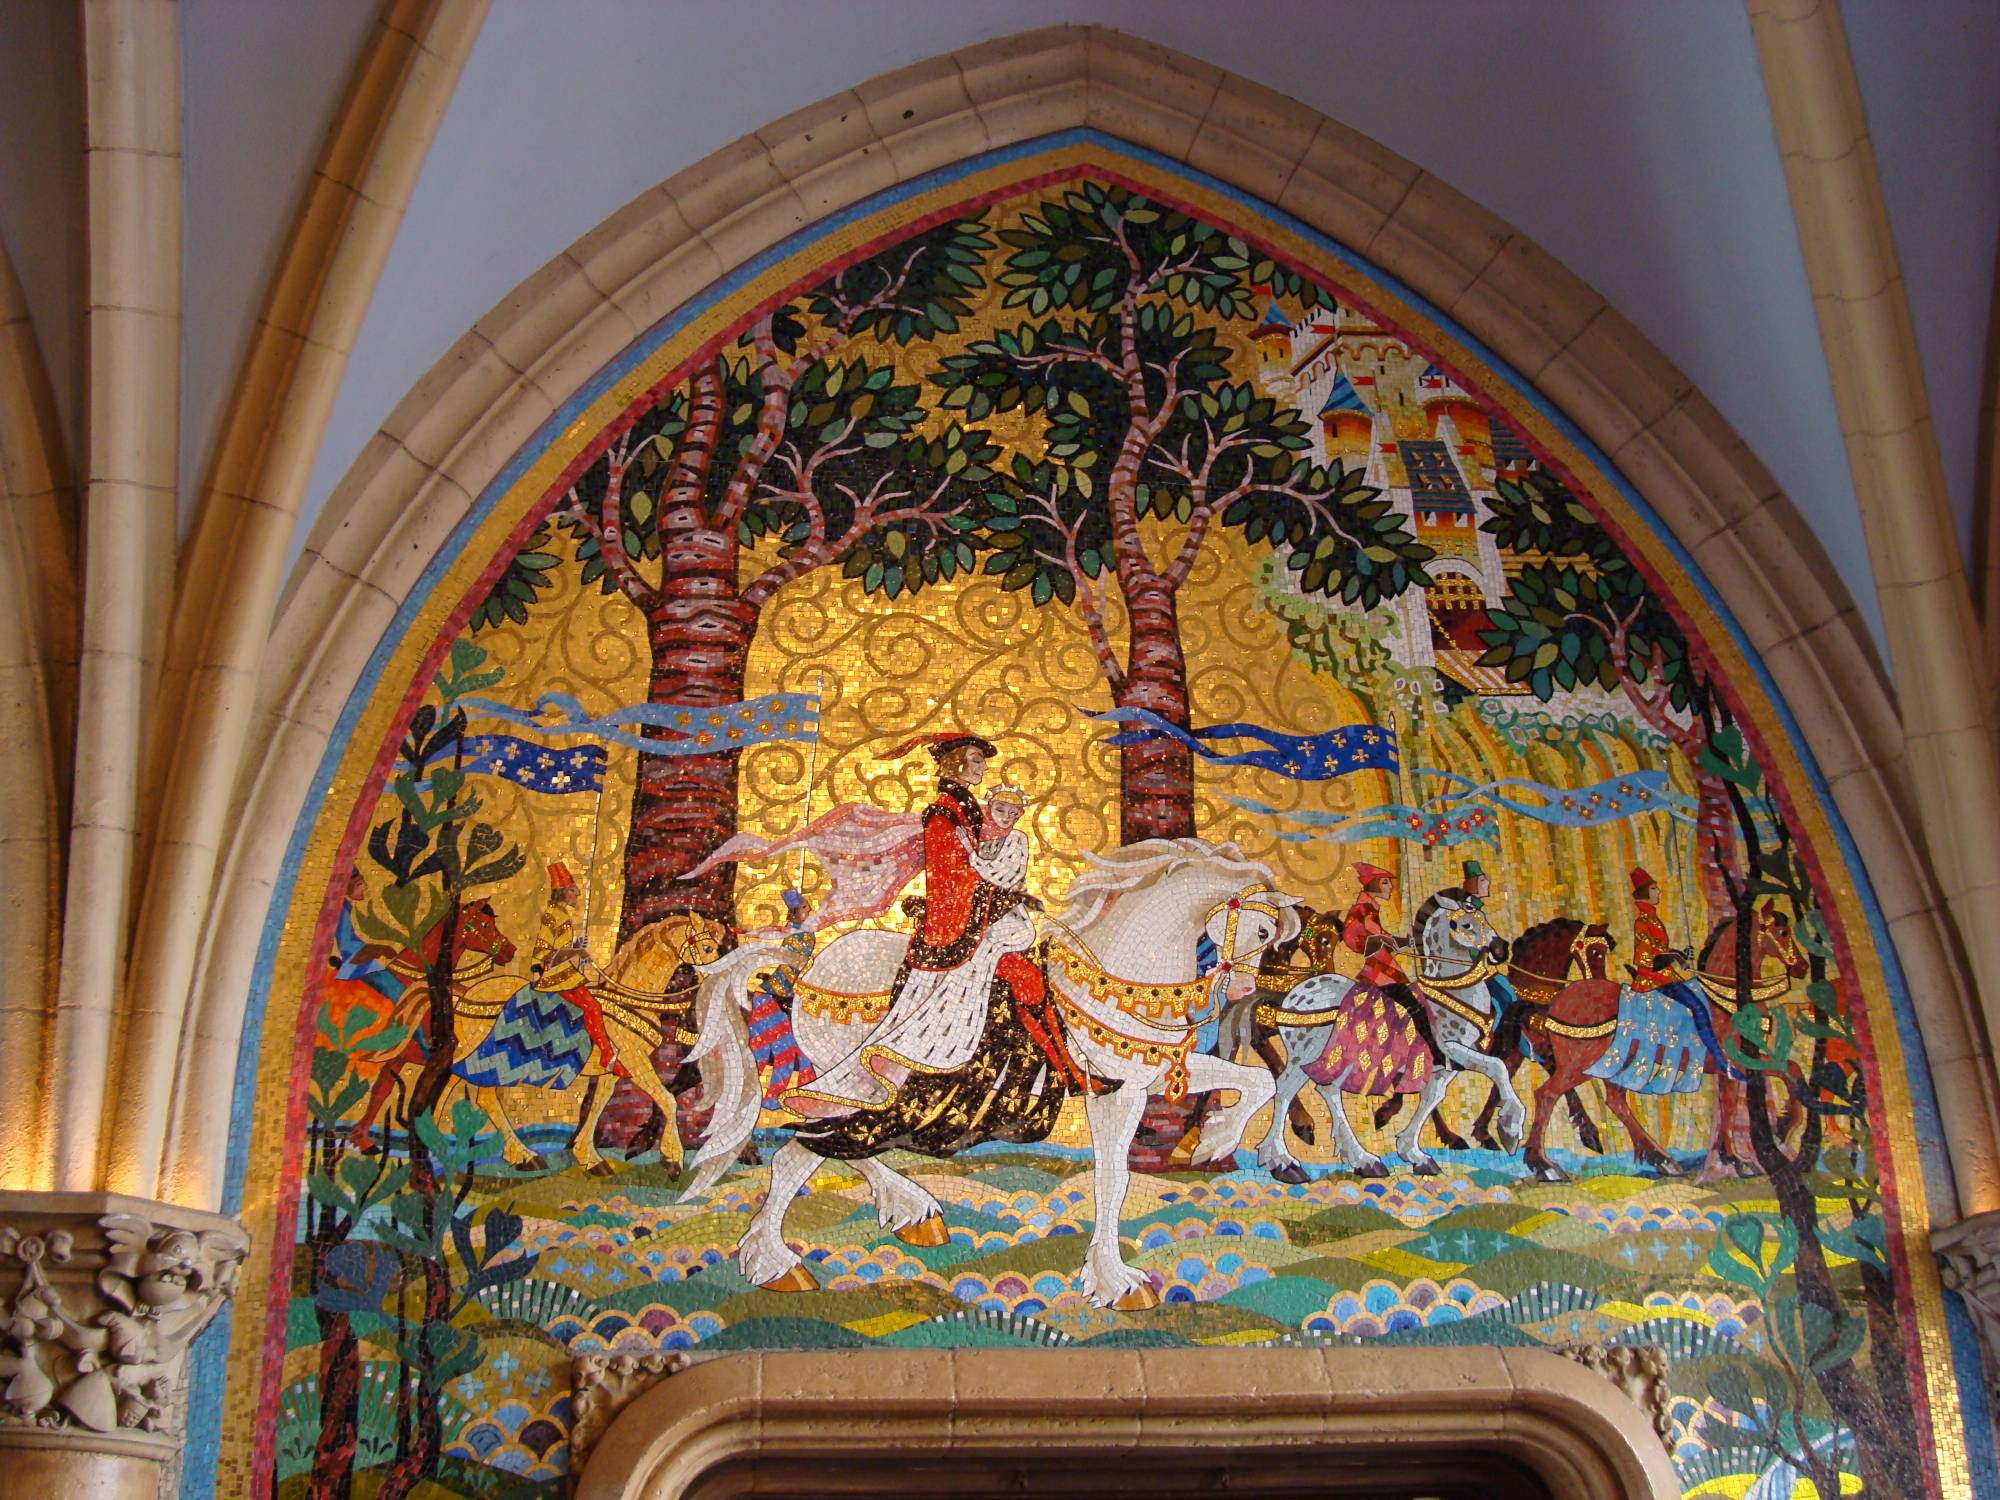 Magic Kingdom - Cinderella Castle murals